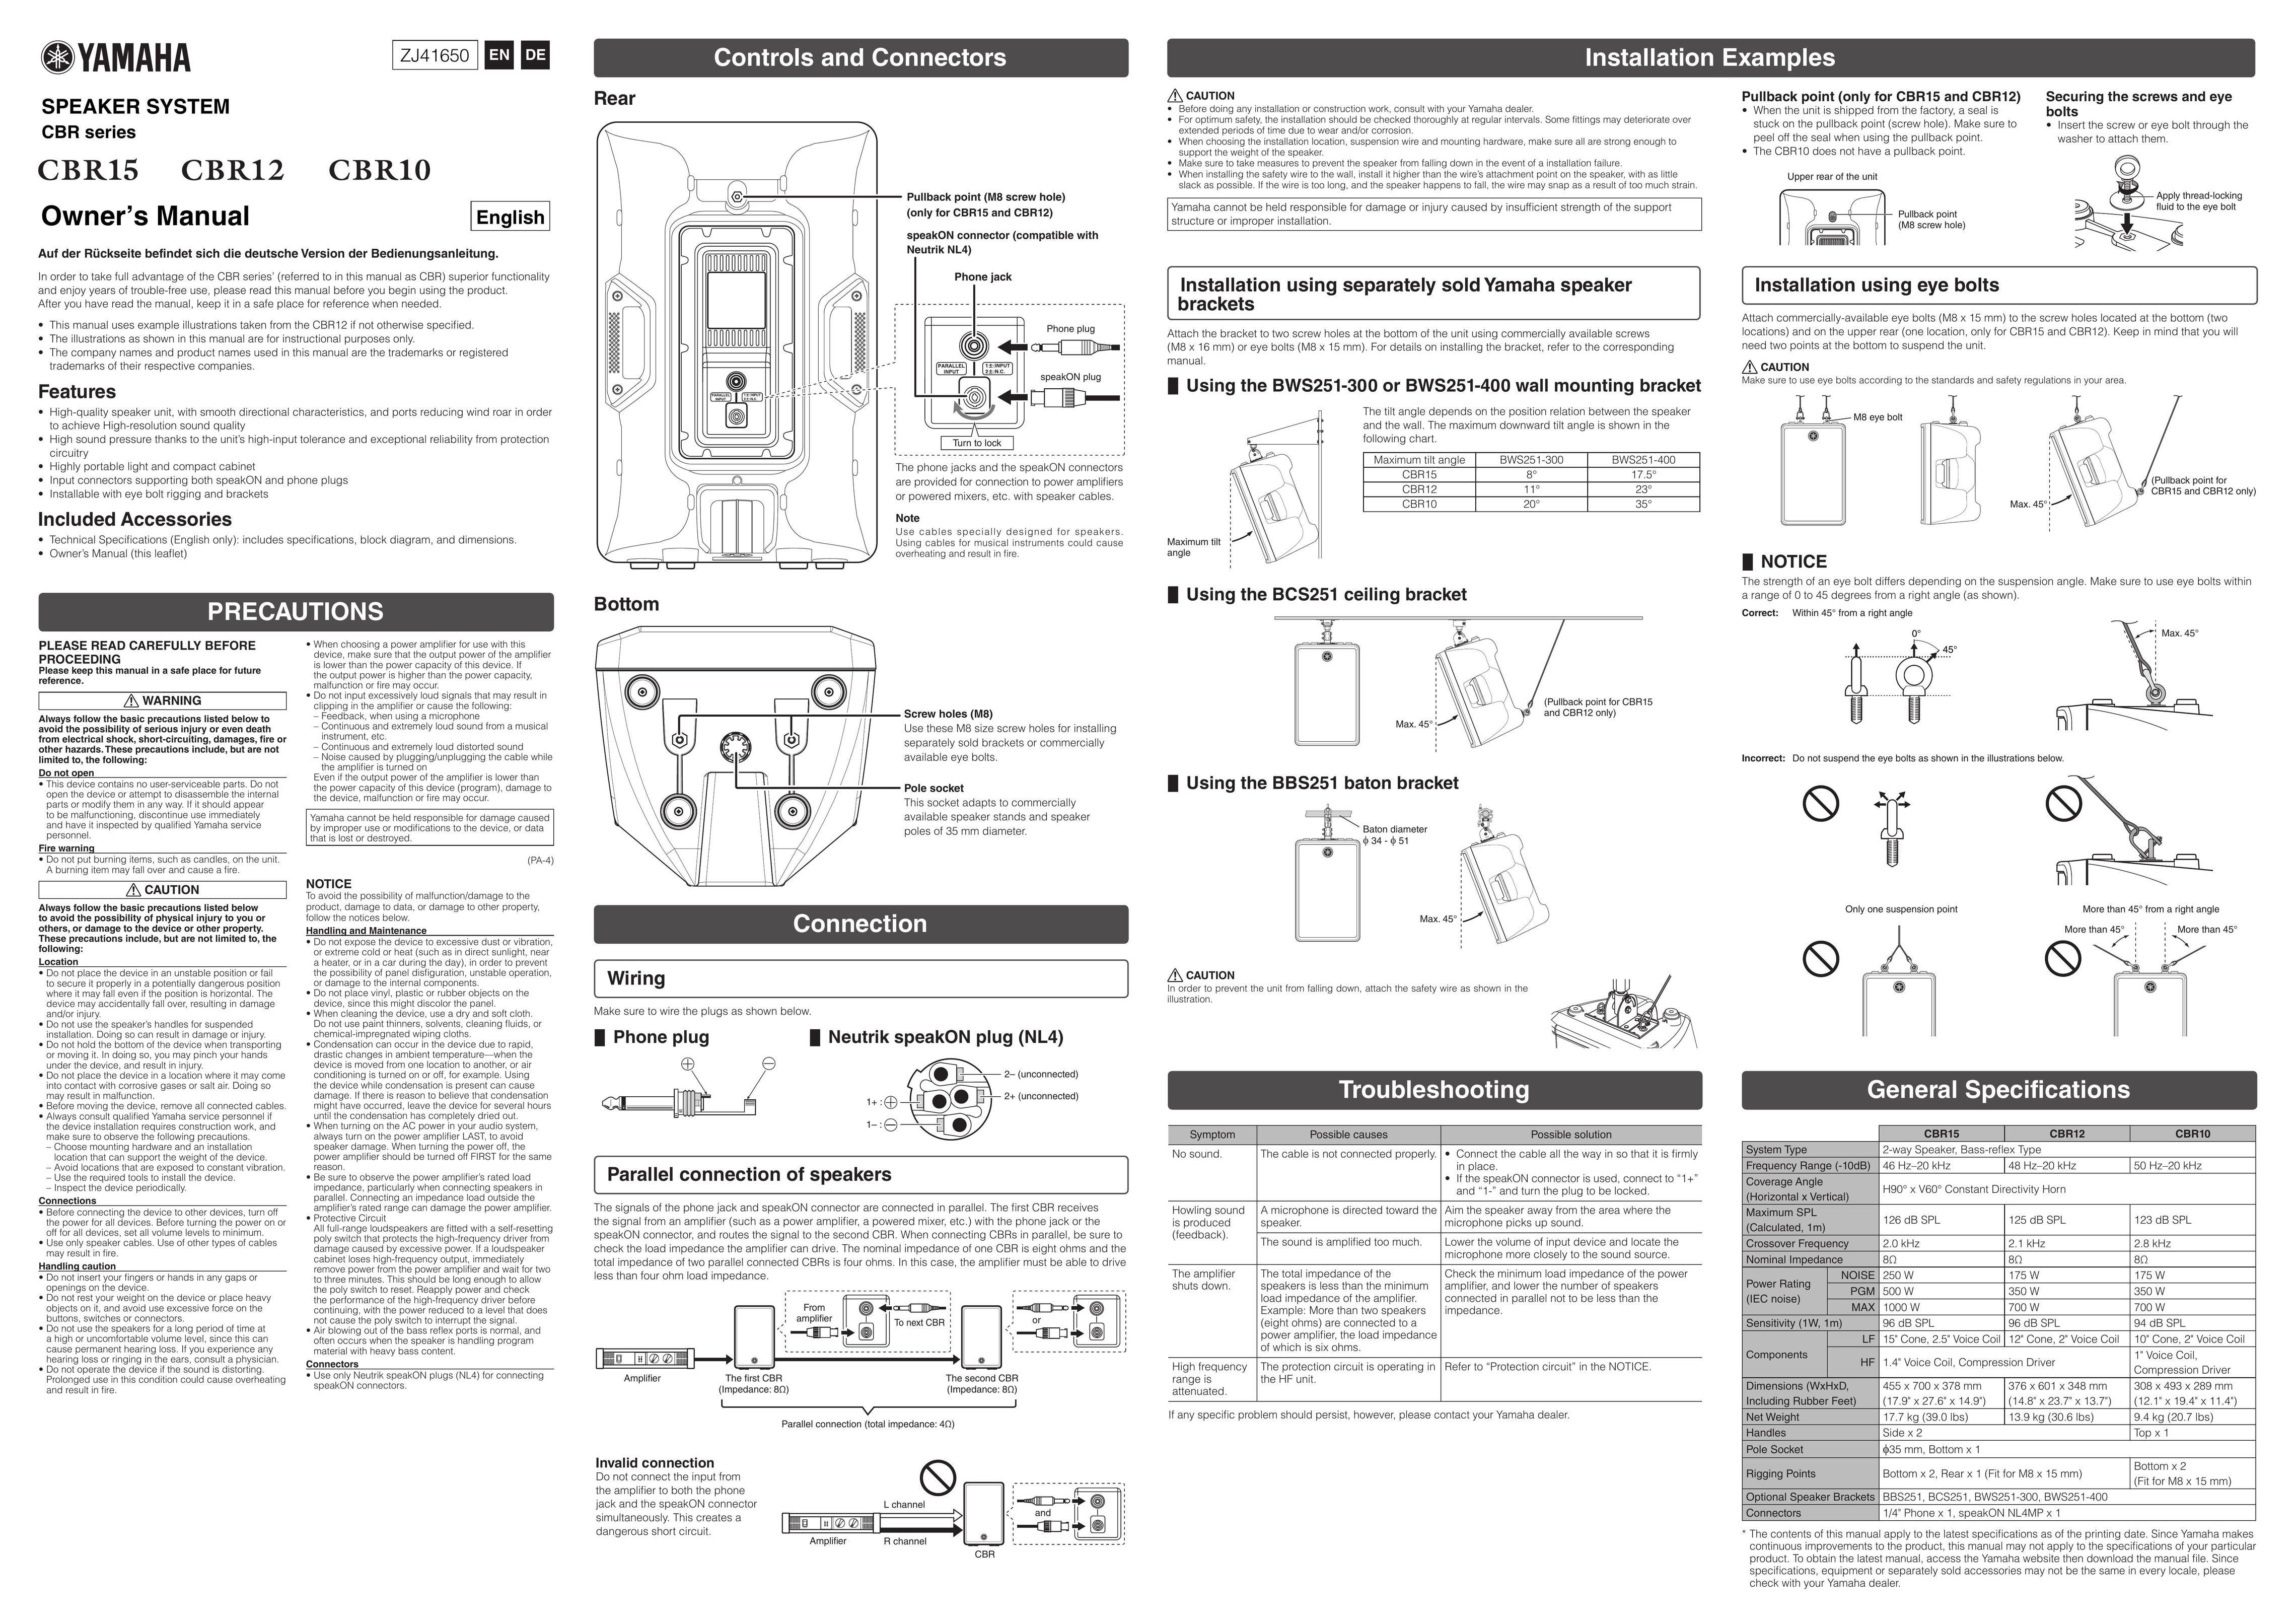 Yamaha CBR10 Portable Speaker User Manual